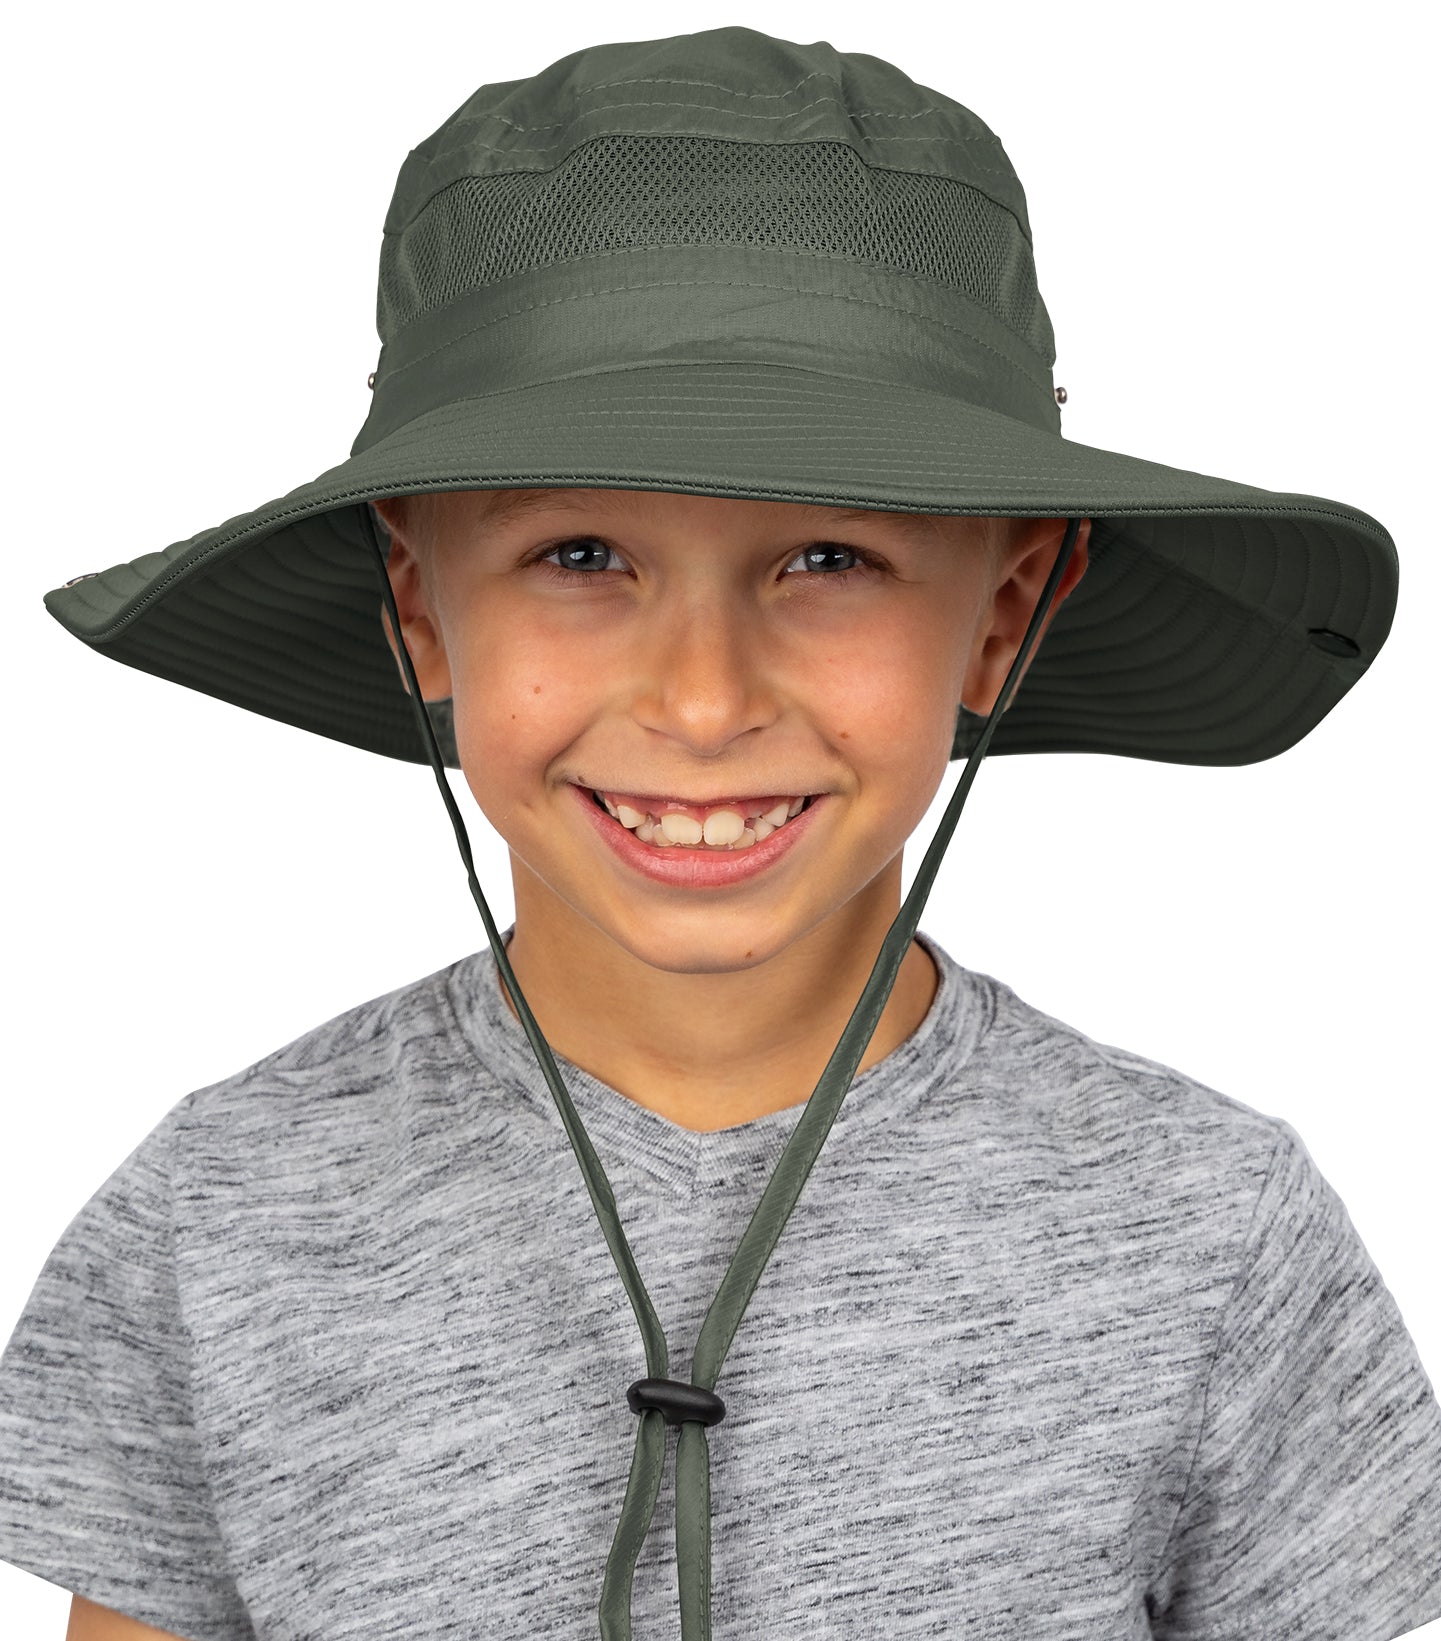 CFPrint Fishing Head Net Hat, Sun Hat with Hidden Mesh Mask, unisex Hats for Outdoor Activities, Safari Hat for Hiking, Camping, Gardeni, Pool